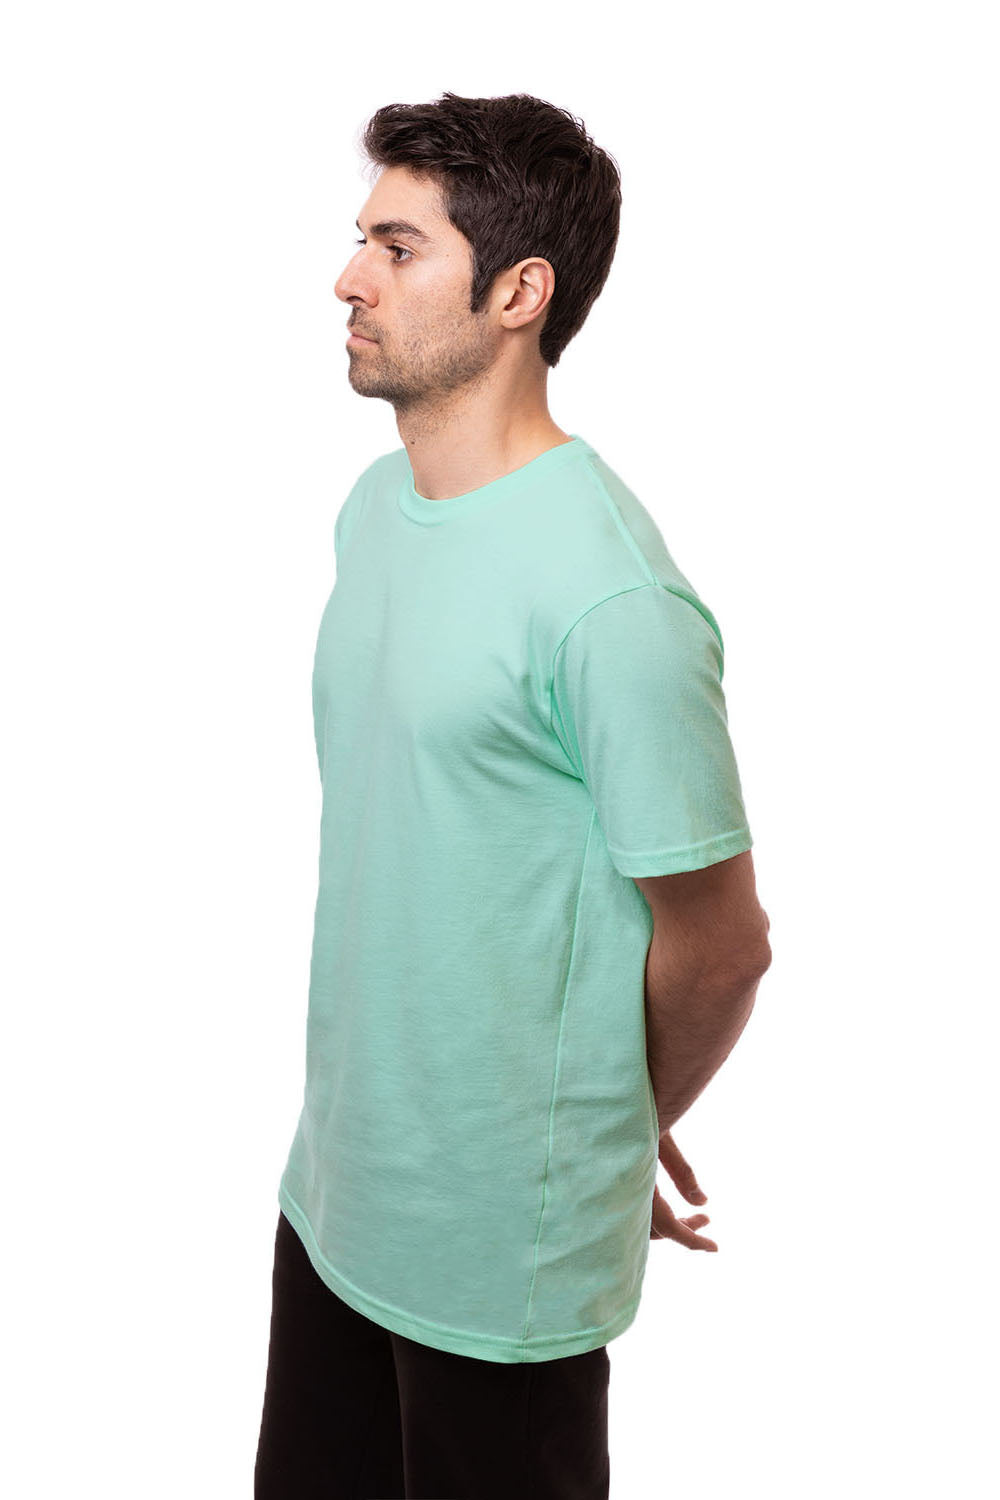 Econscious EC1000 Mens Short Sleeve Crewneck T-Shirt Sunwashed Mint Green SIde